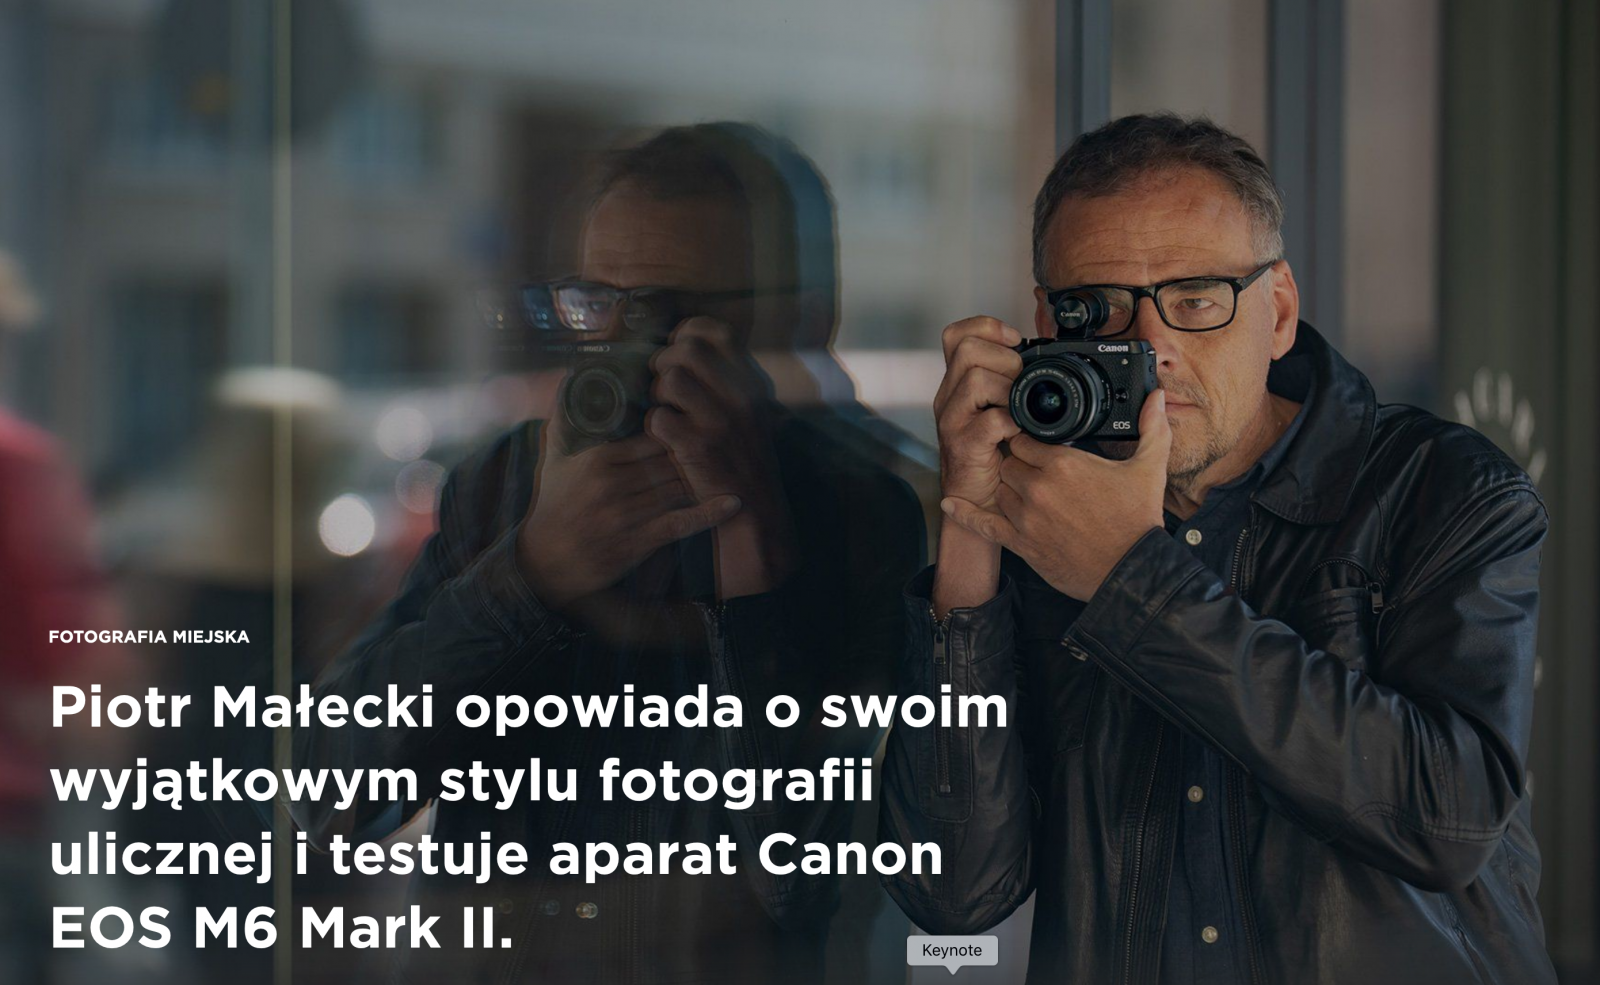 Canon Website: Brand Ambassador Piotr Malecki tests Canon EOS M6 Mark II